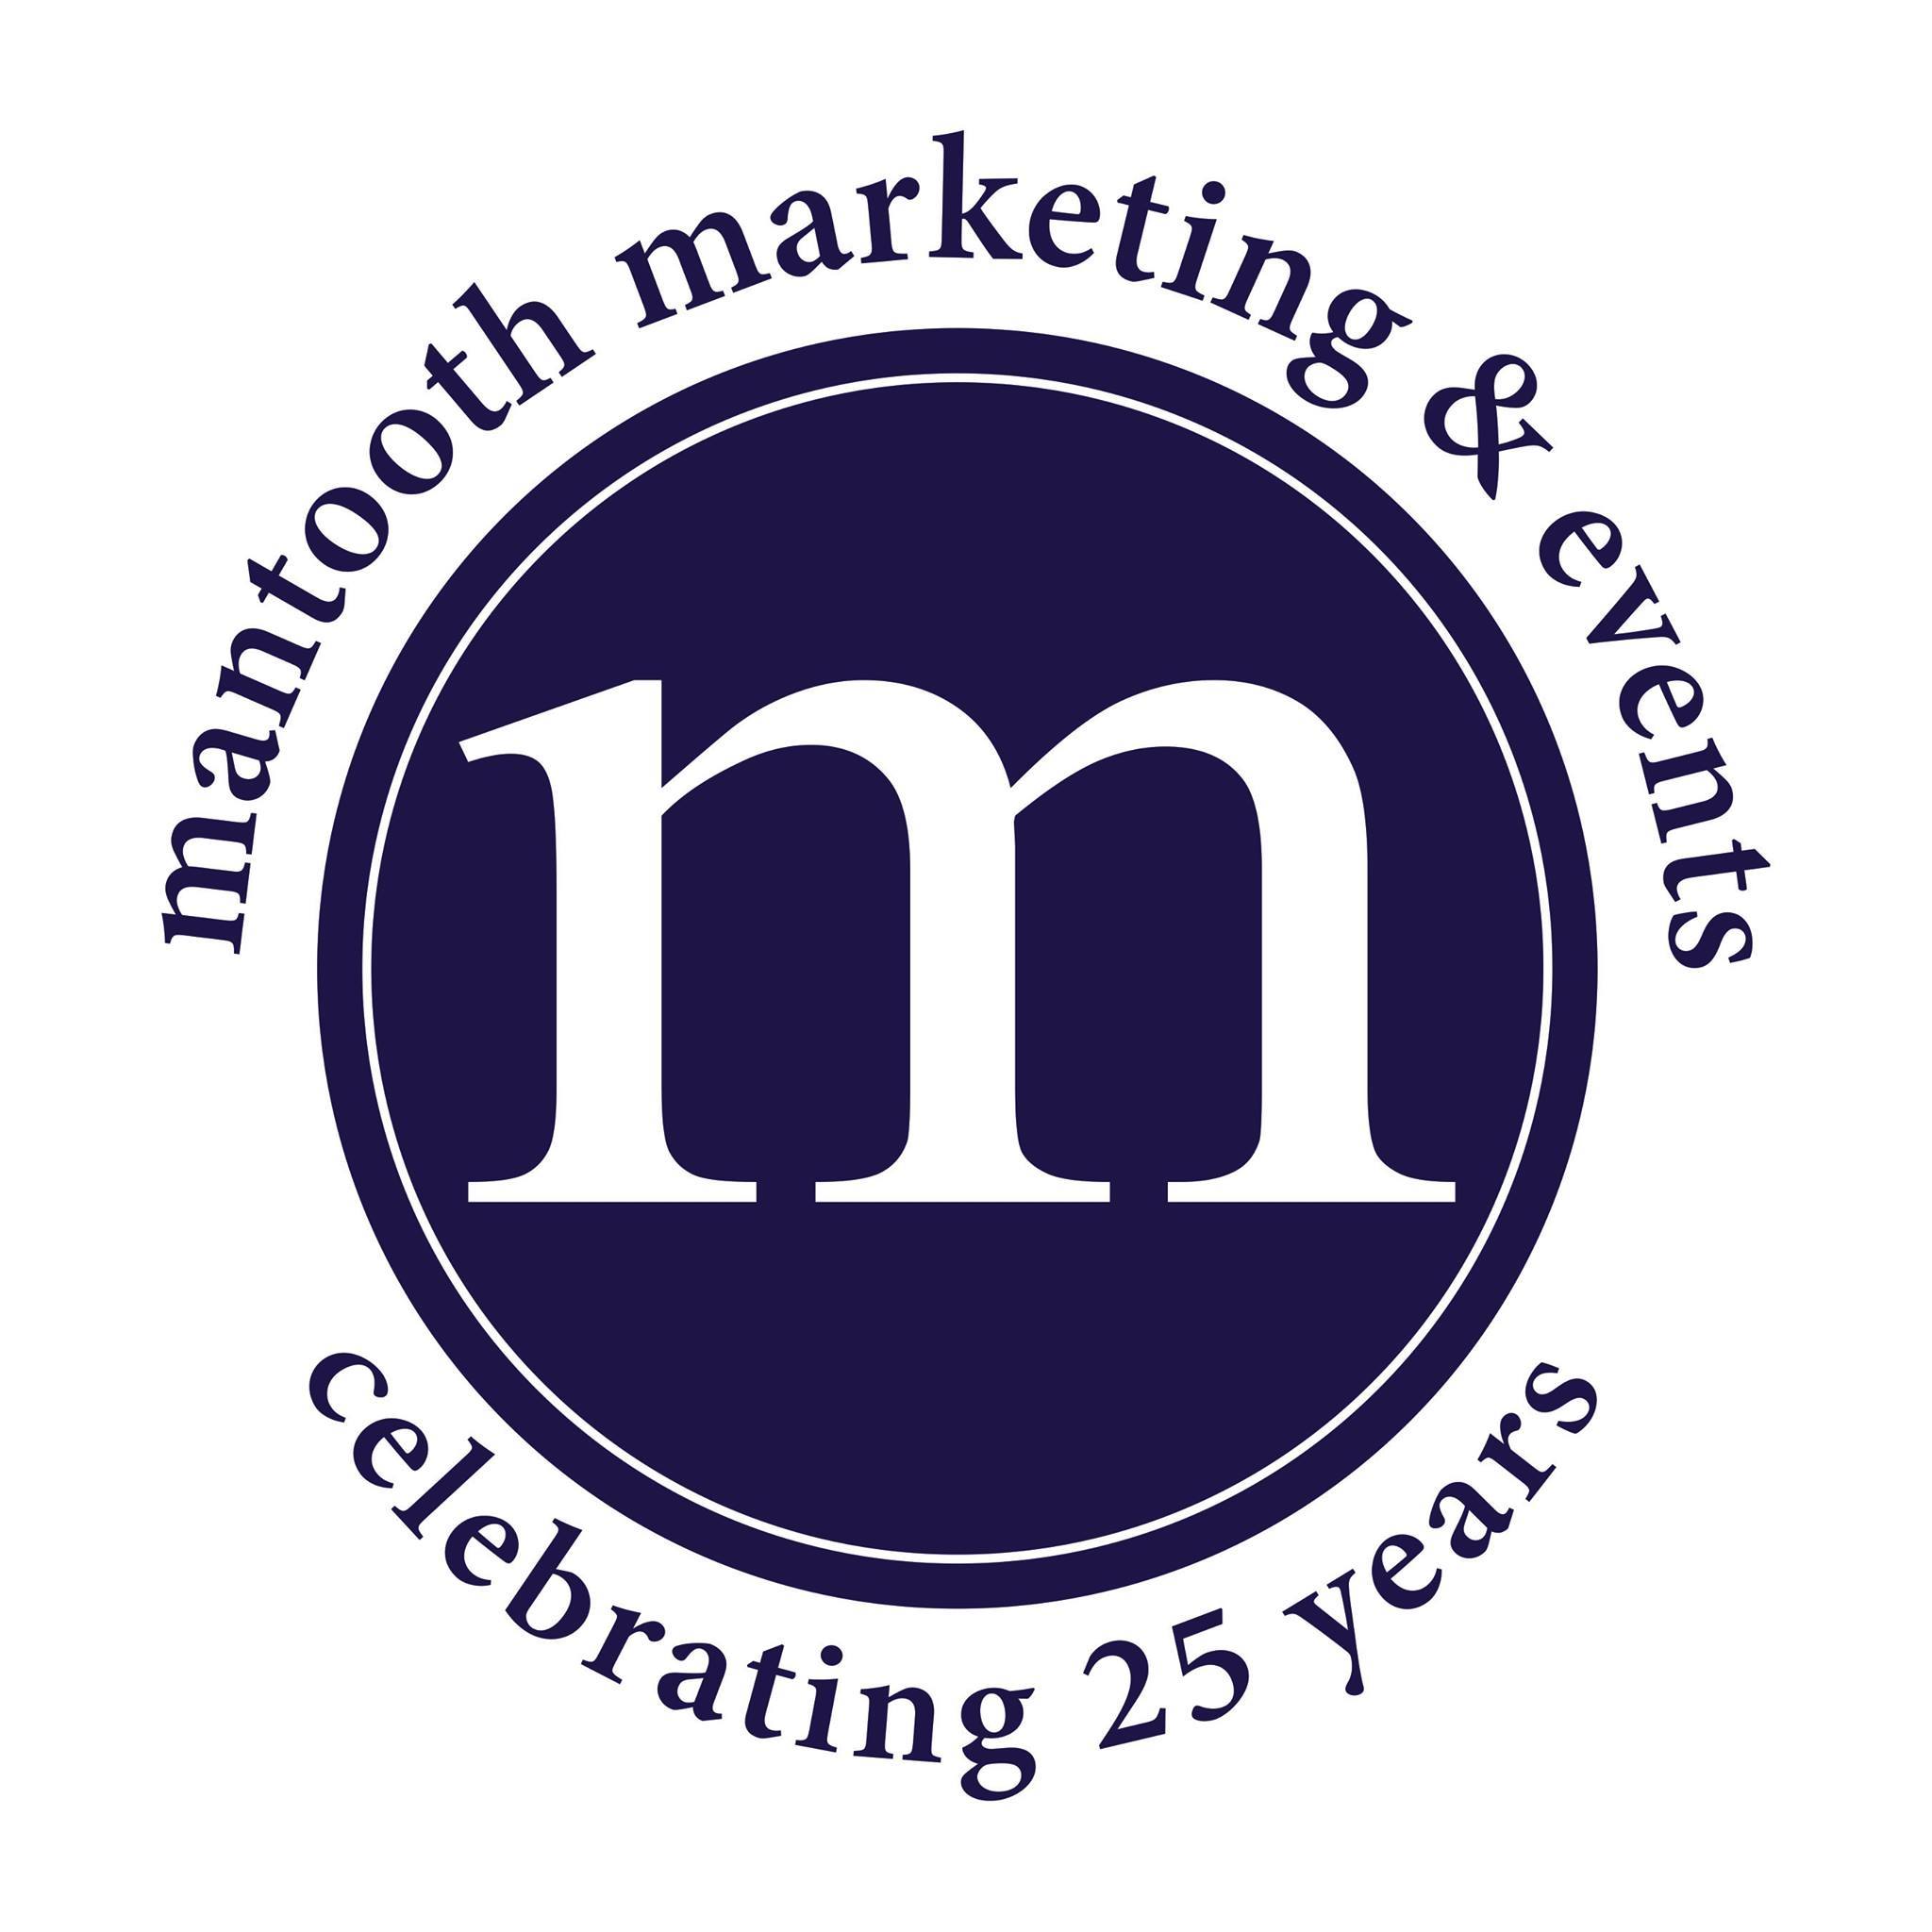 Business logo of Mantooth Marketing & Events Company